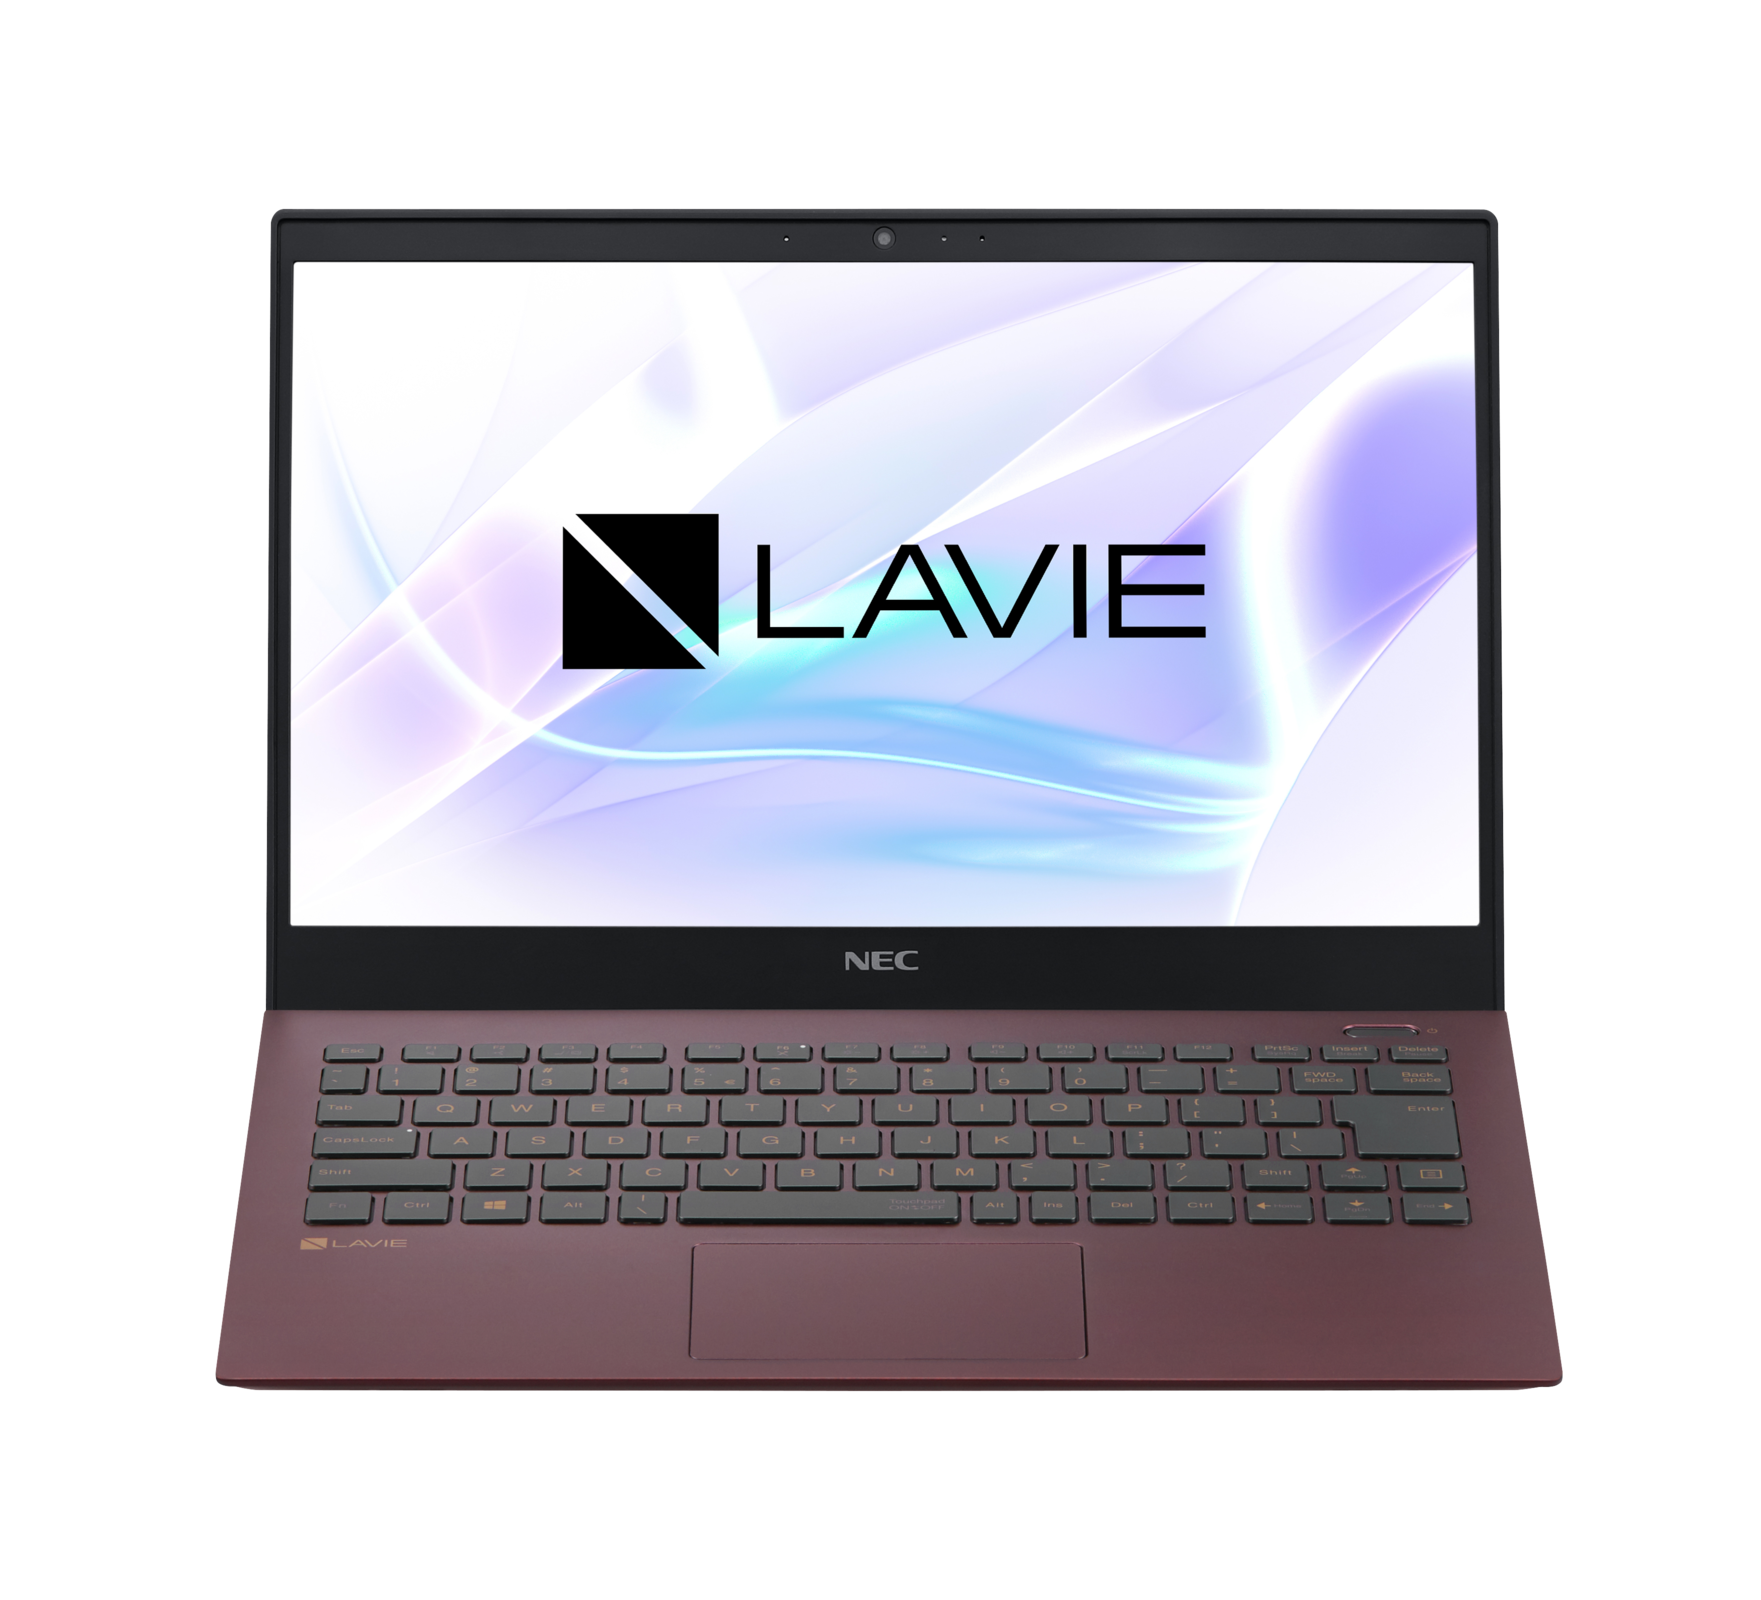 The NEC Lavie Pro Mobile is a stylish Ultrabook under 1 kg -  NotebookCheck.net News